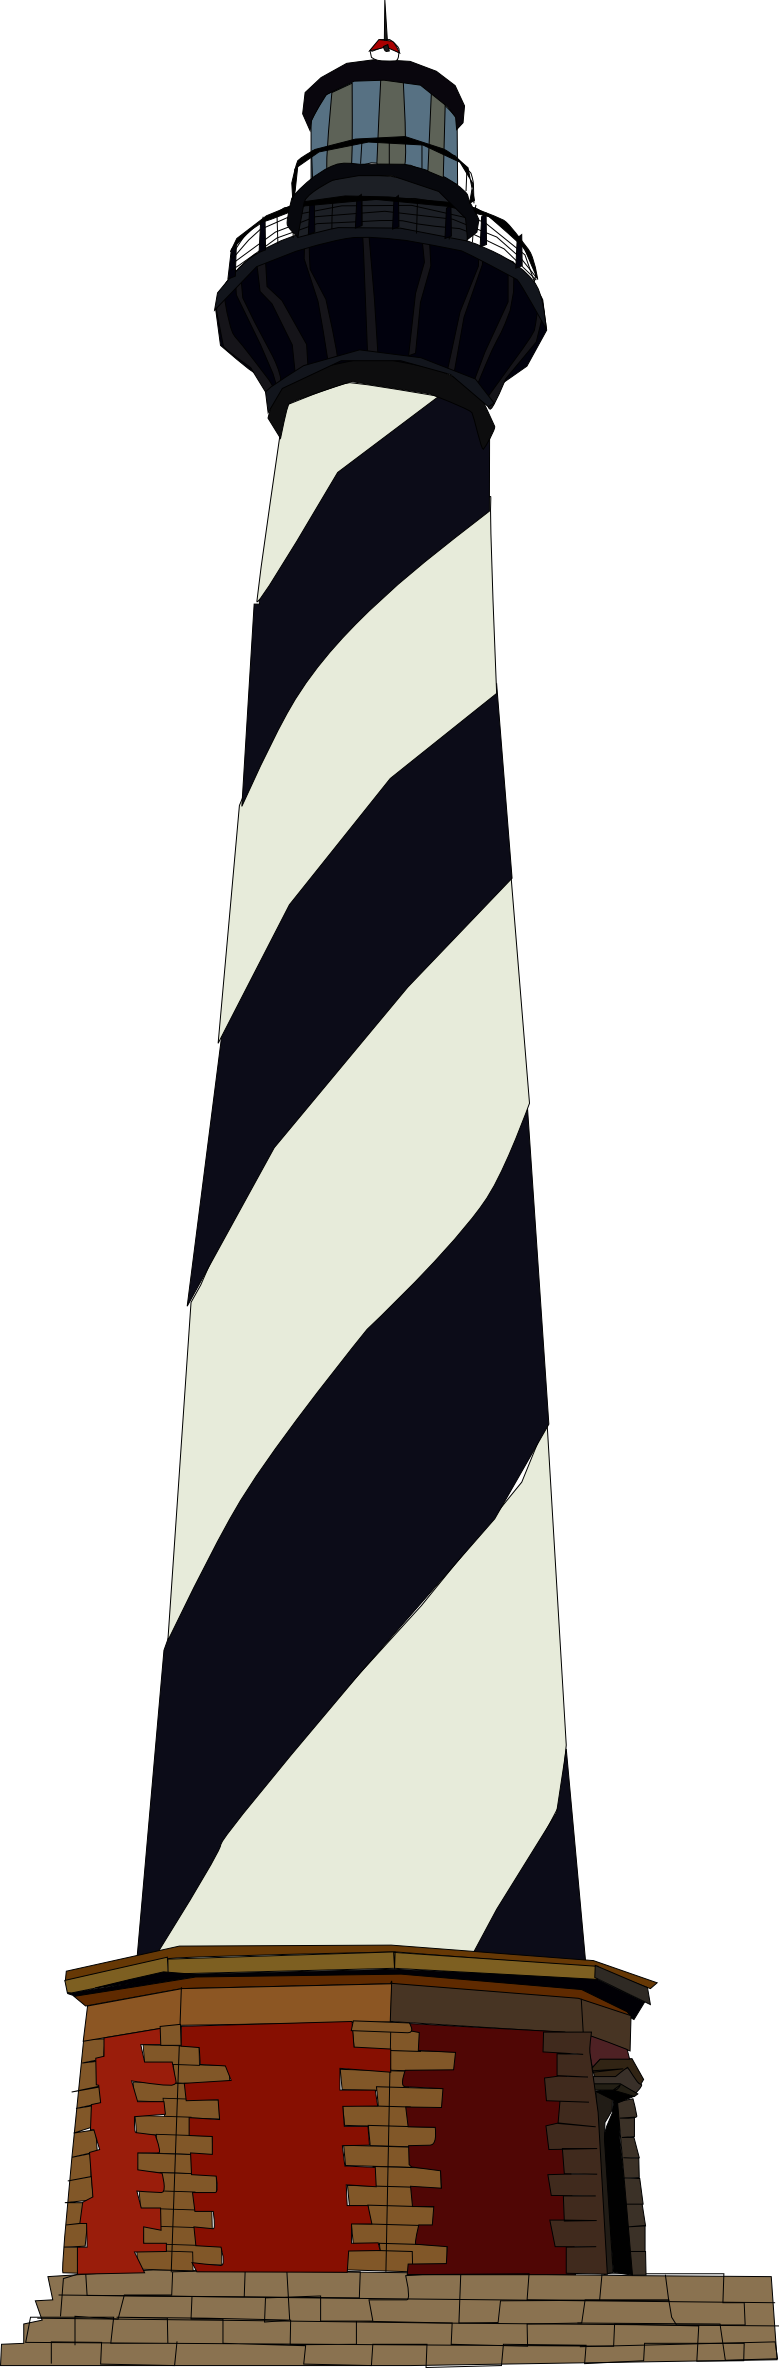 Cape hatteras lighthouse clipart